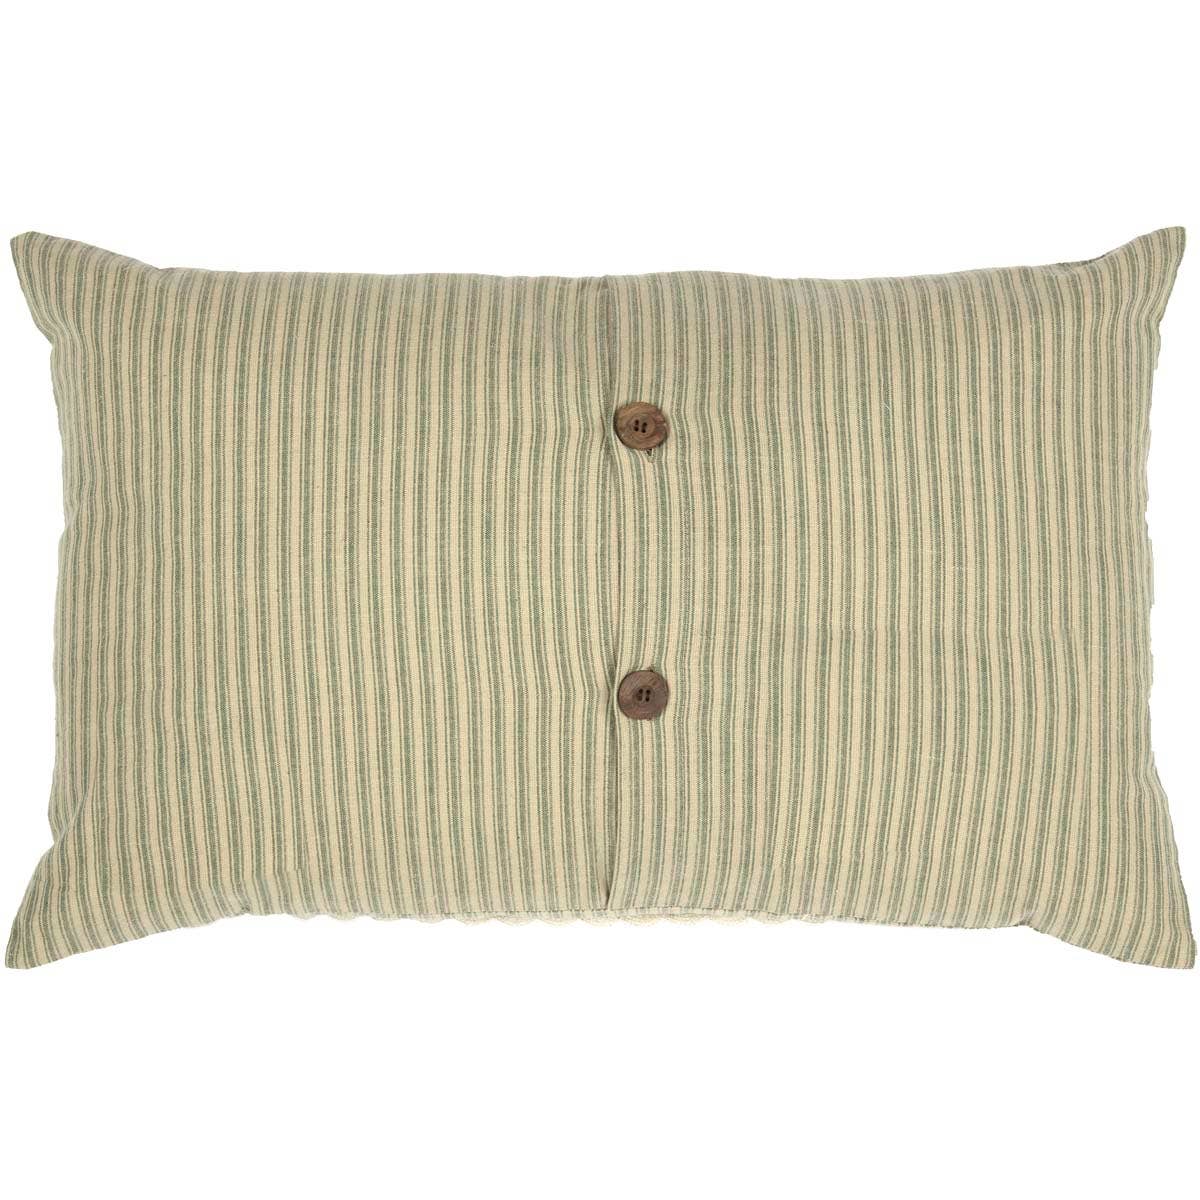 Prairie Winds Home Pillow 14x22